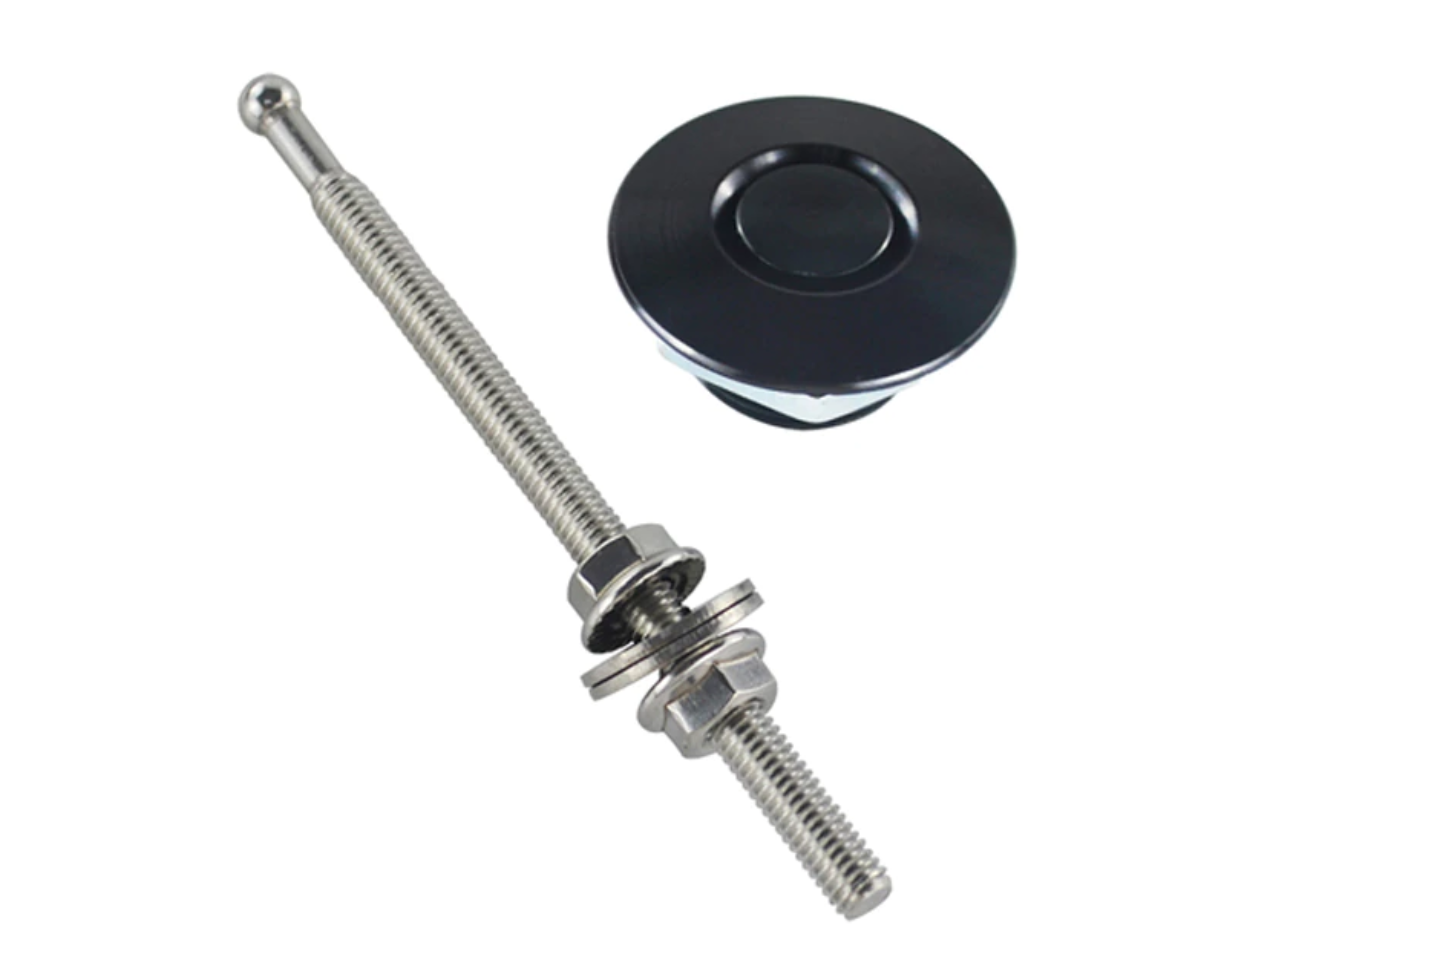 Push Button Billet Hood Pins Lock Clip Kit Car Quick Pins For BMW 1.25" Universal JDM Style Black